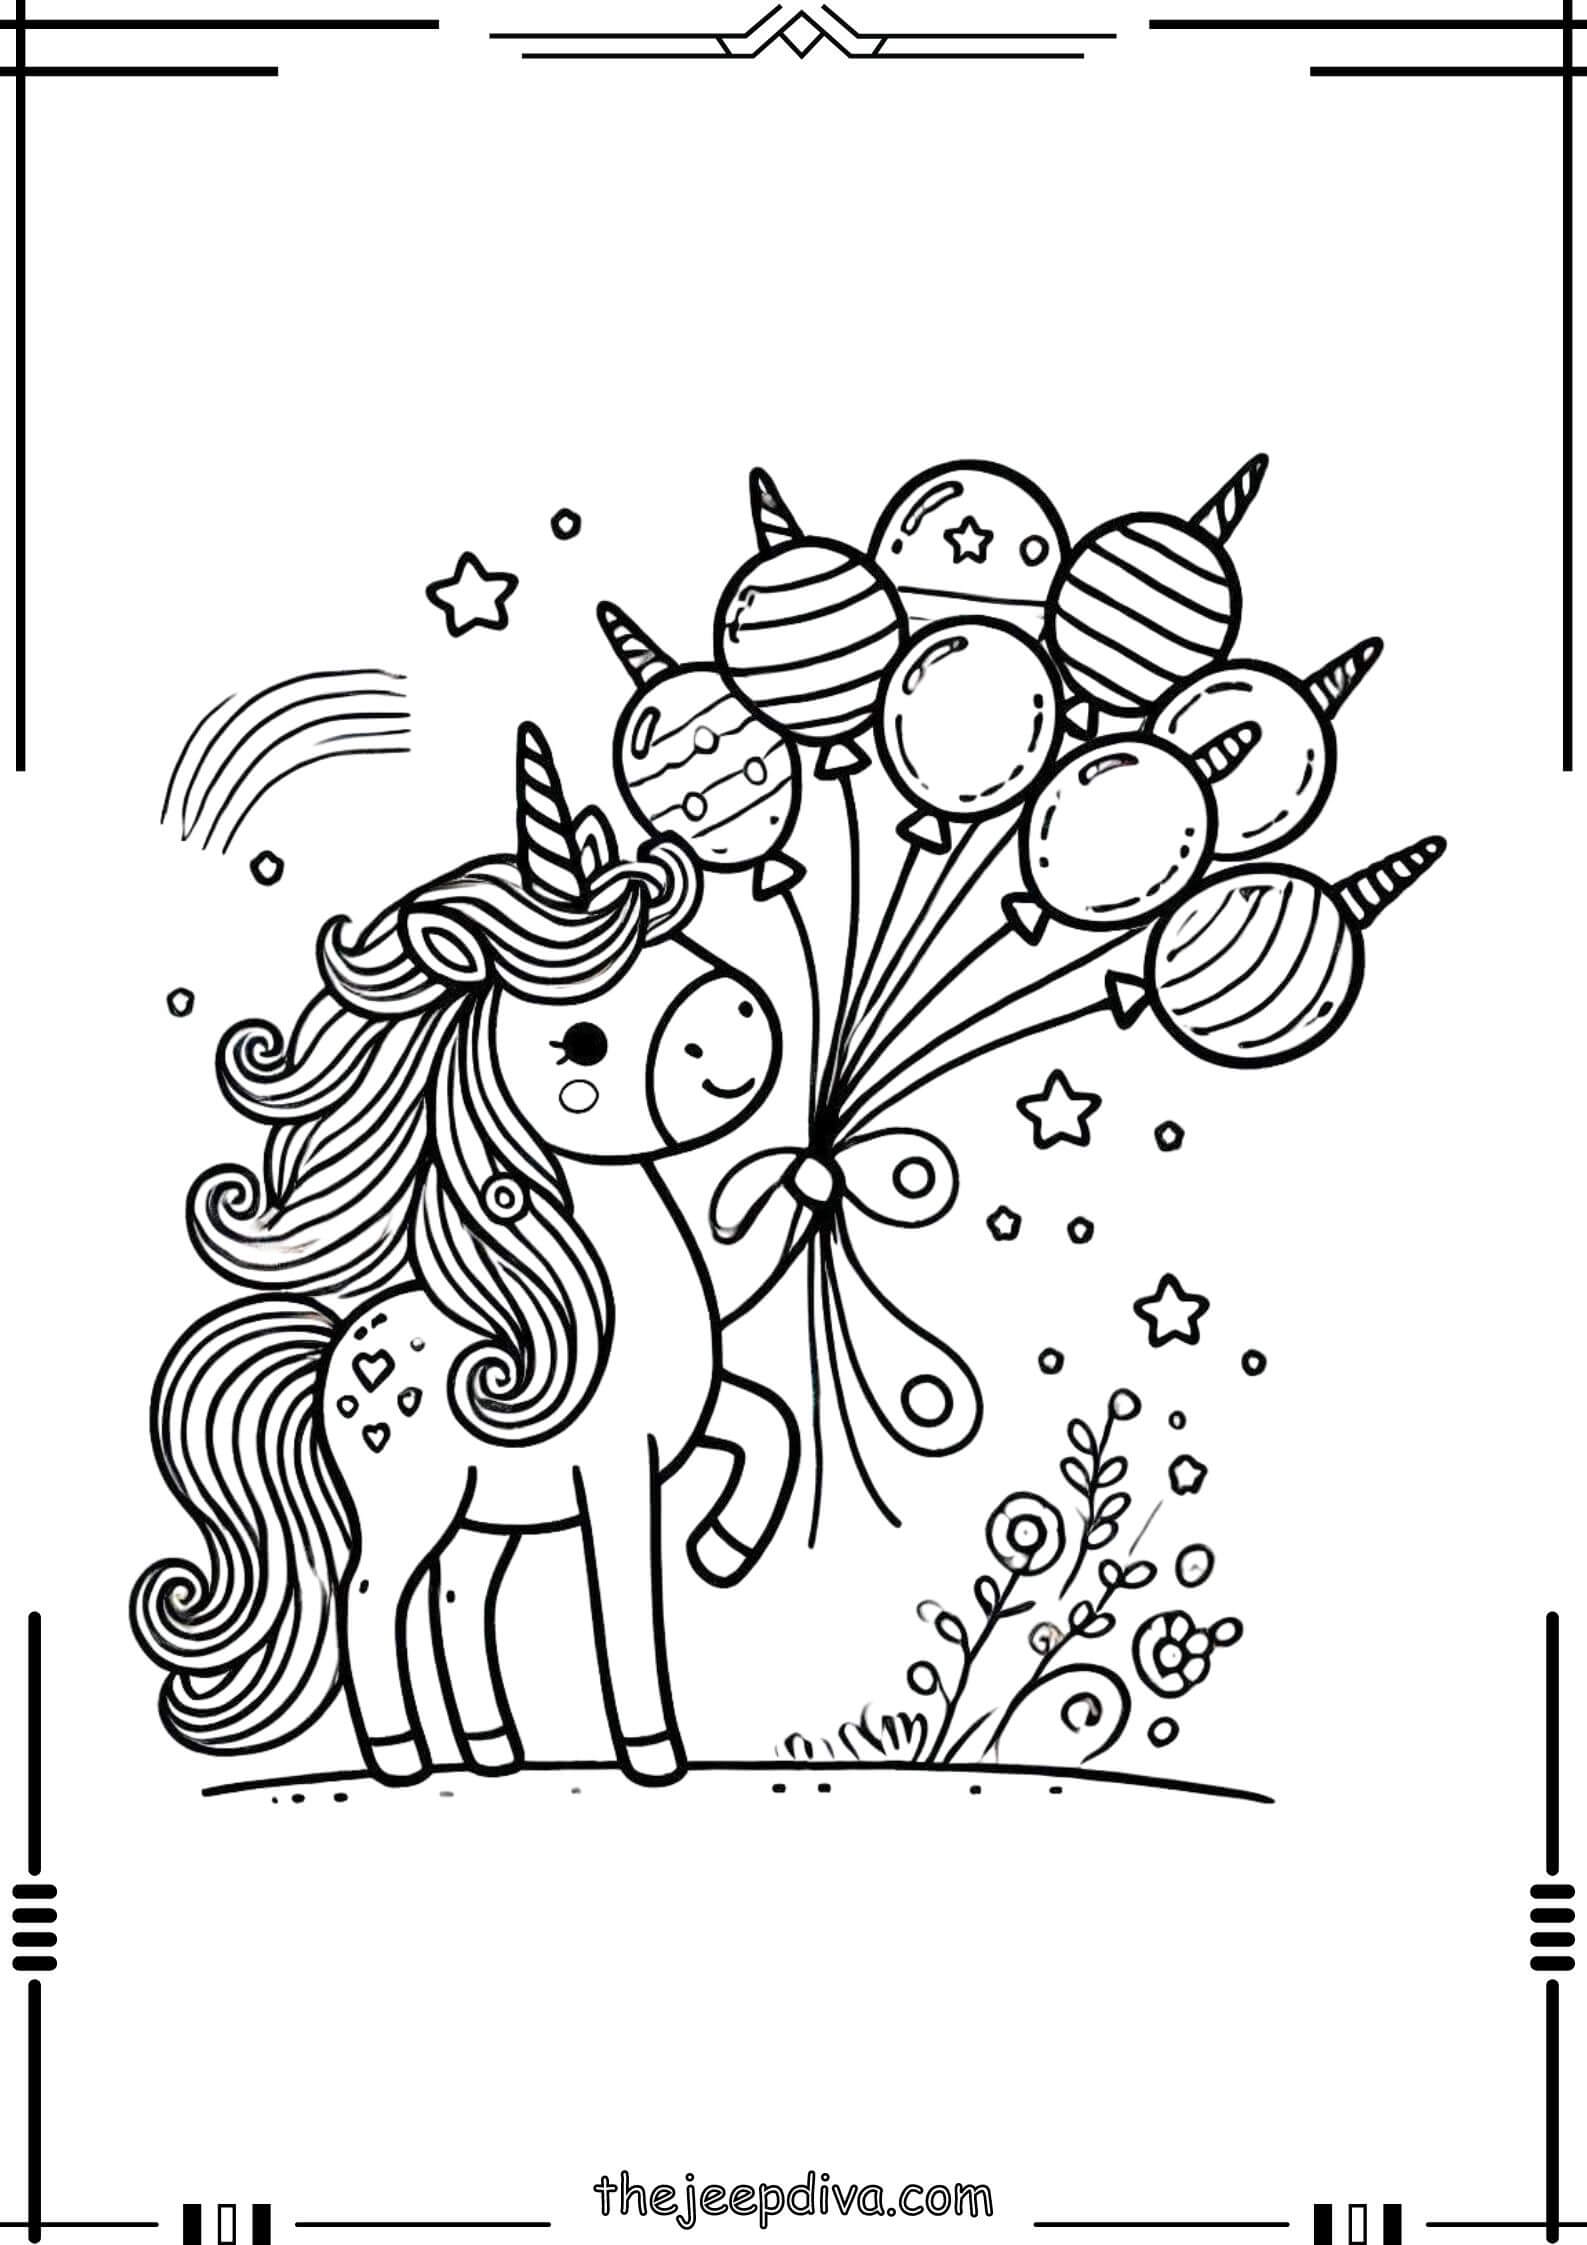 unicorn-coloring-page-medium-2